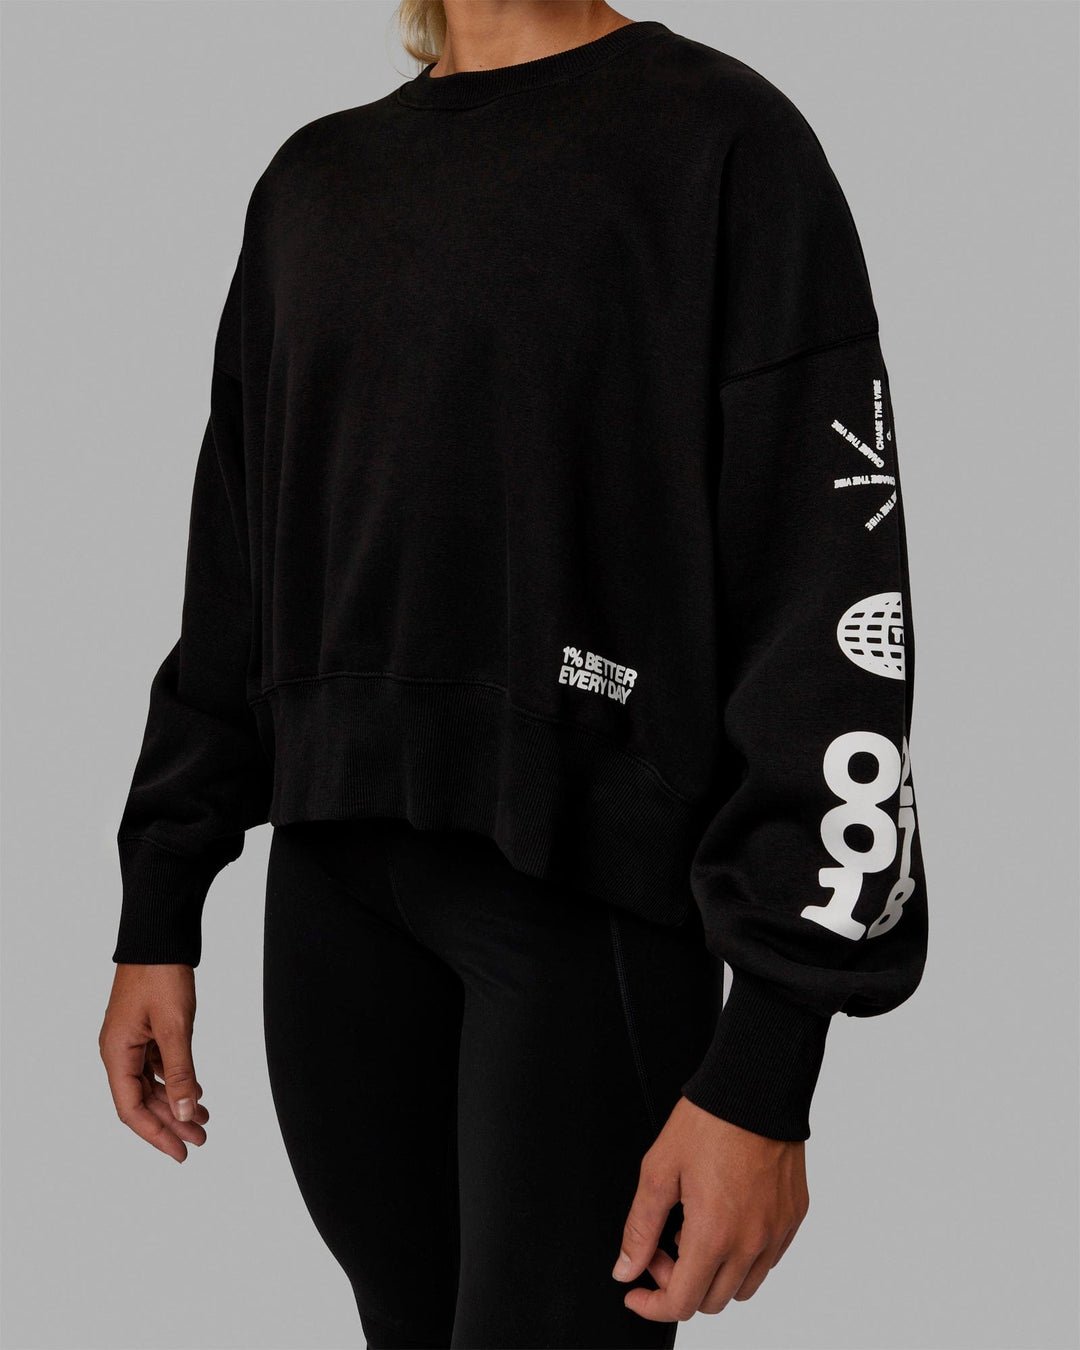 Woman wearing Millennium Sweater - Black